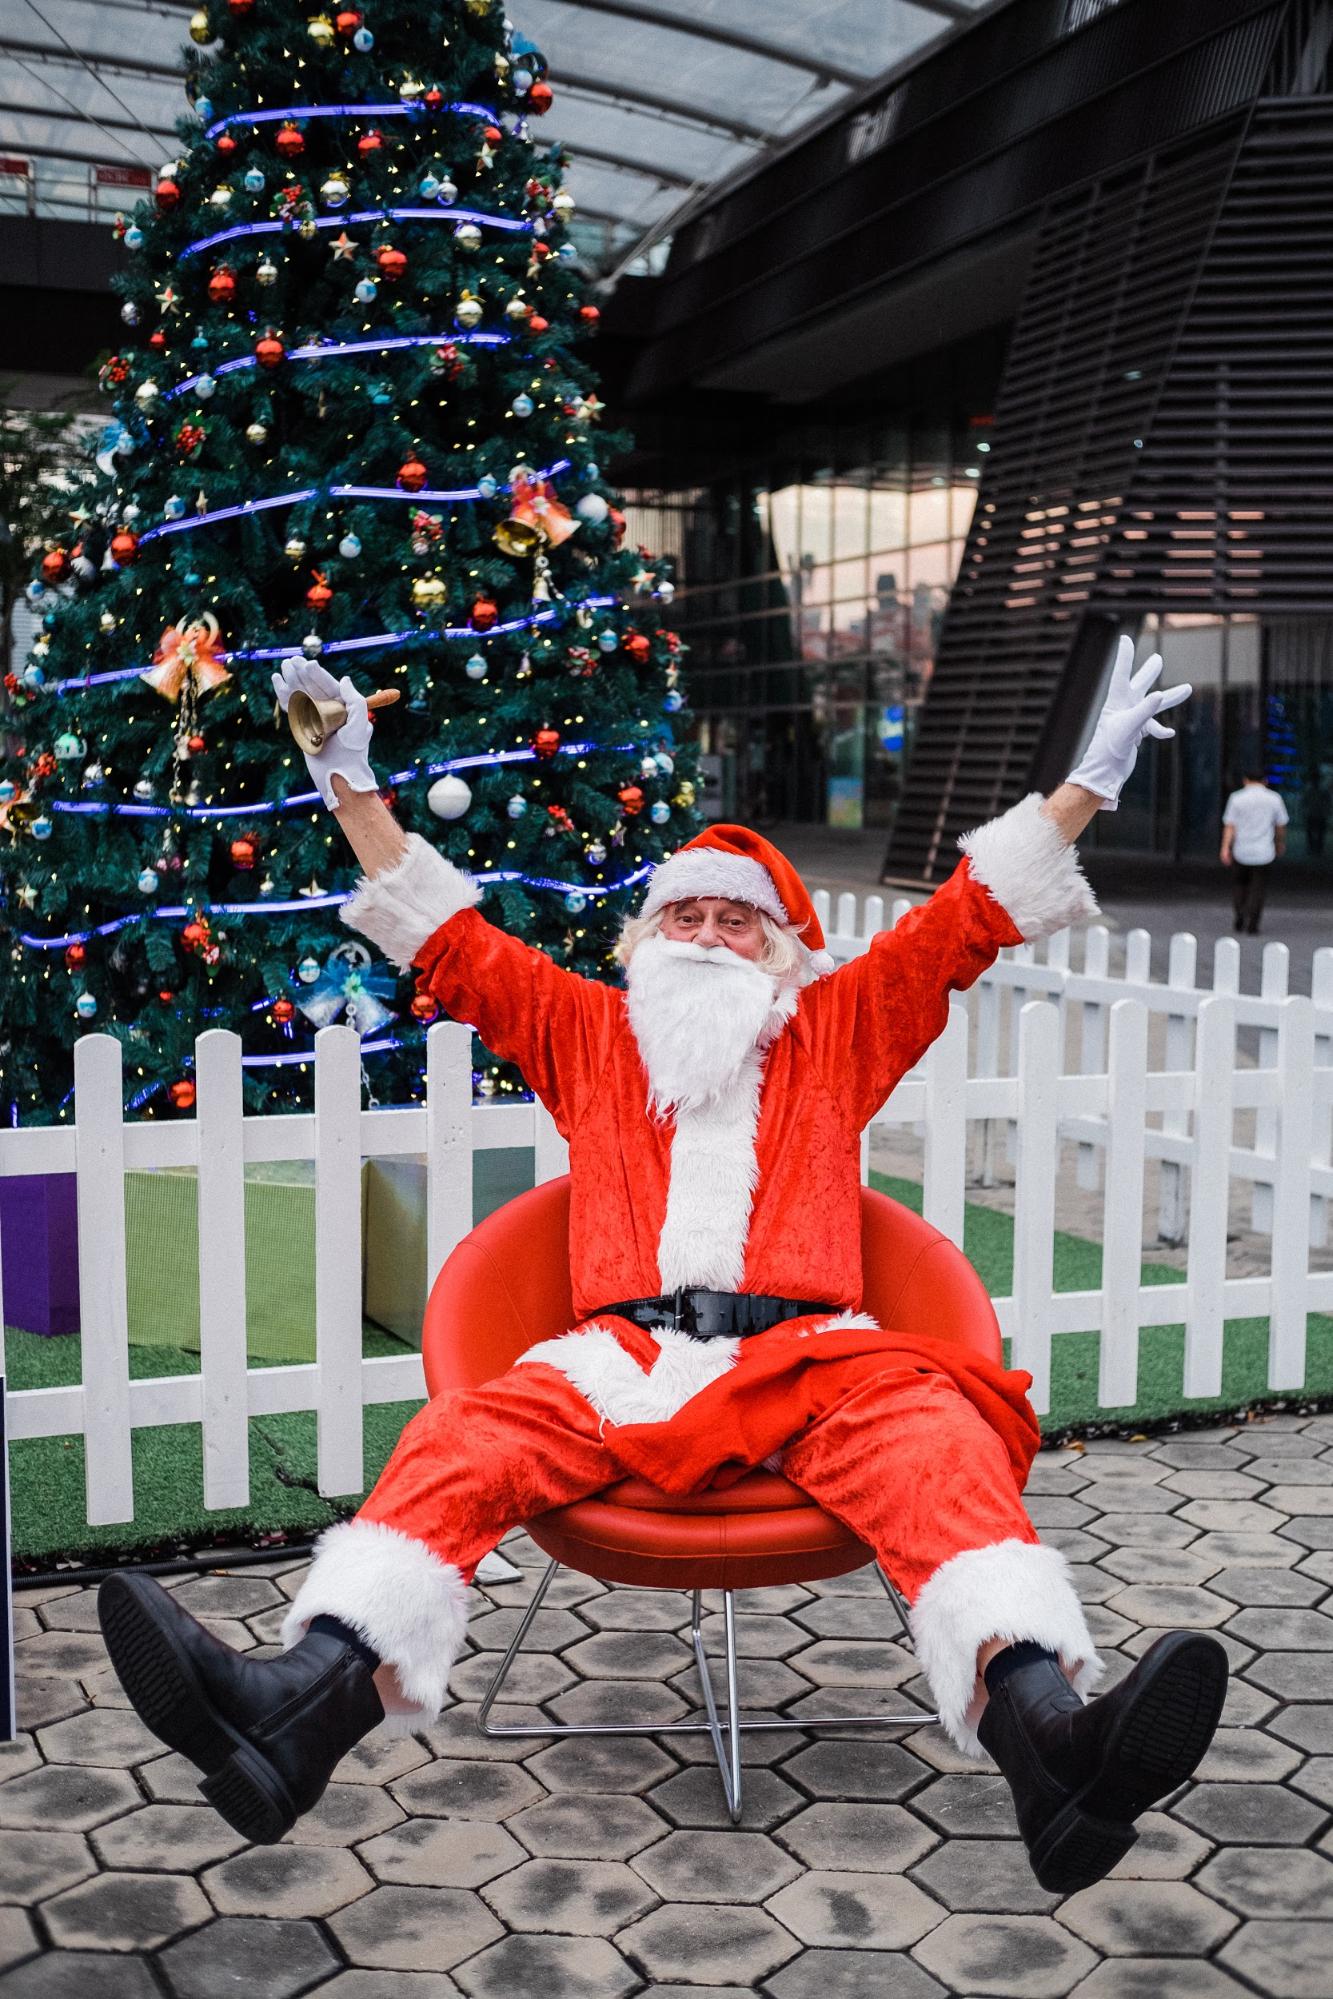 Singapore Sports Hub season of giving - meet greet santa